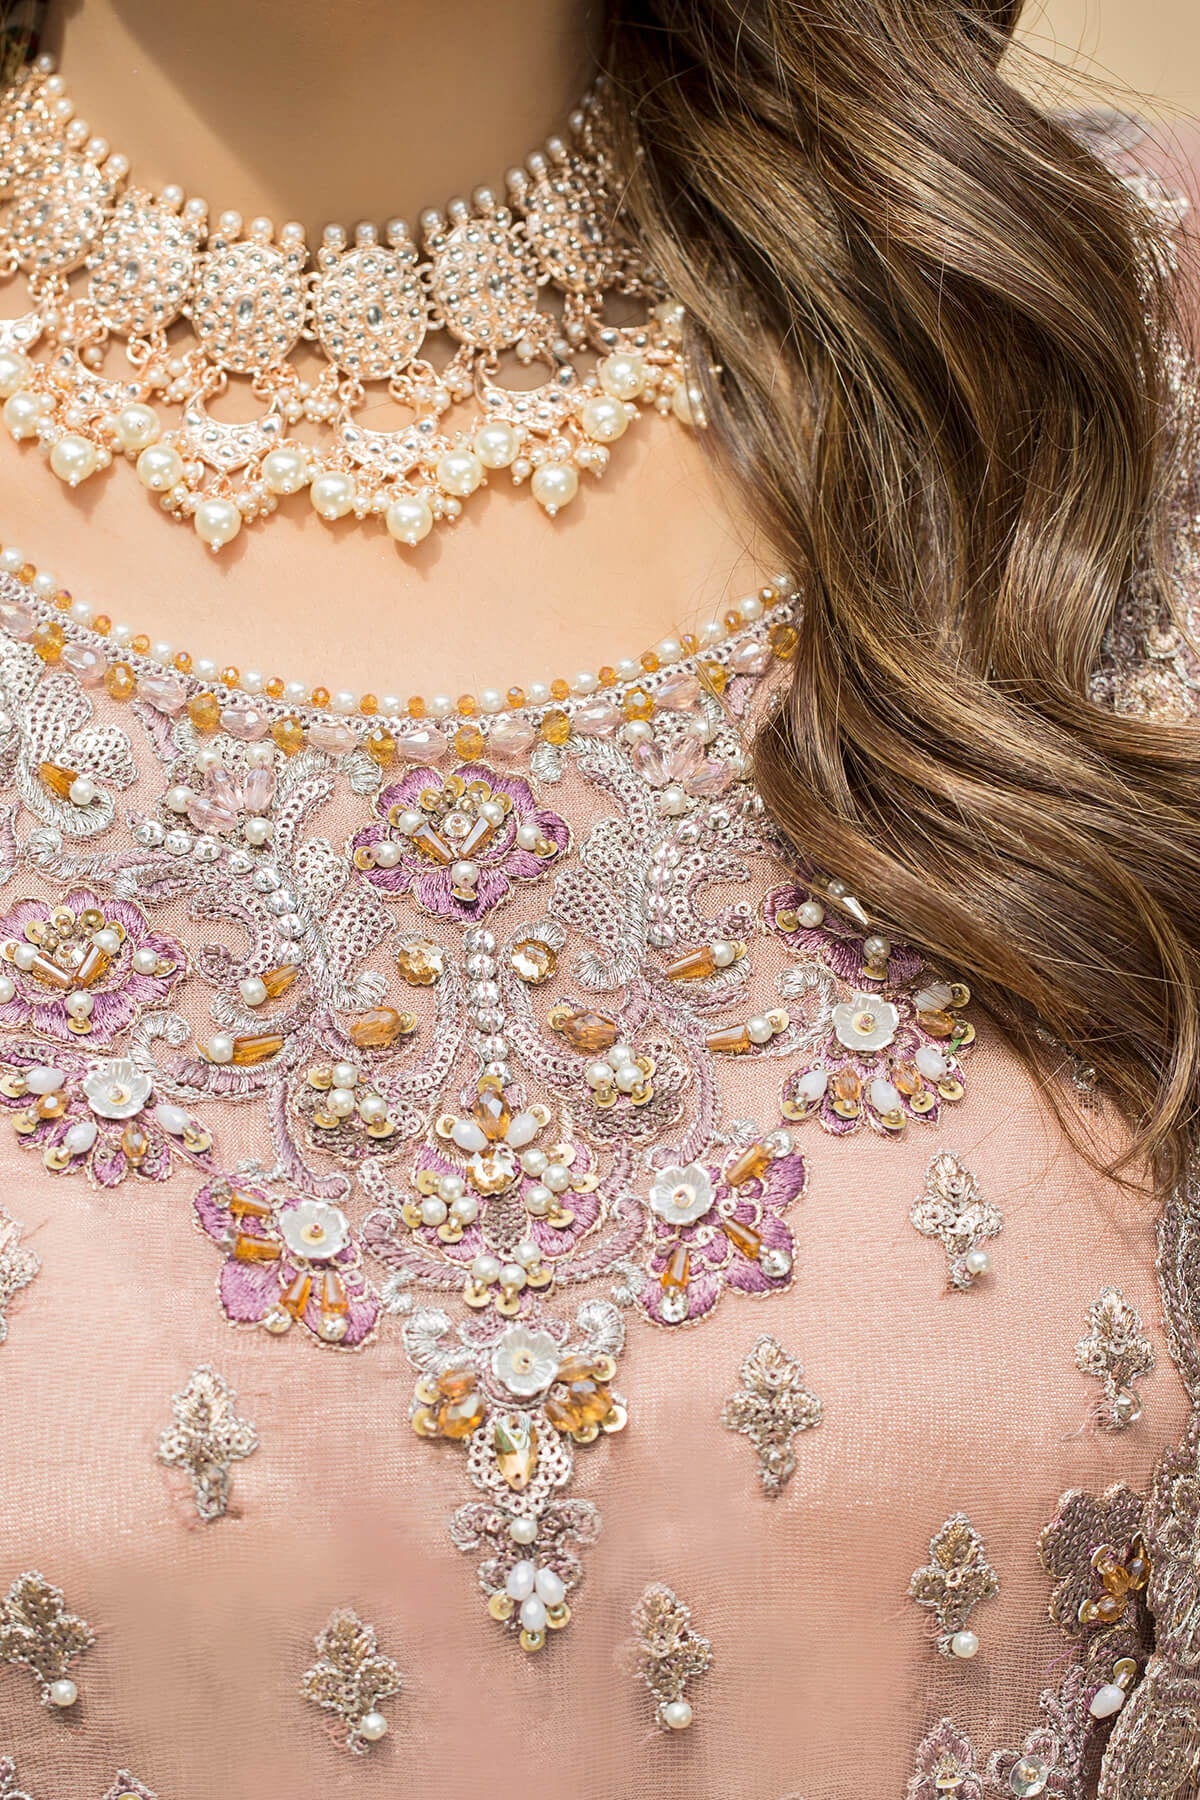 Imrozia Premium Inspired Embroidered 3 Piece Wedding Gharara Outfit - Desi Posh